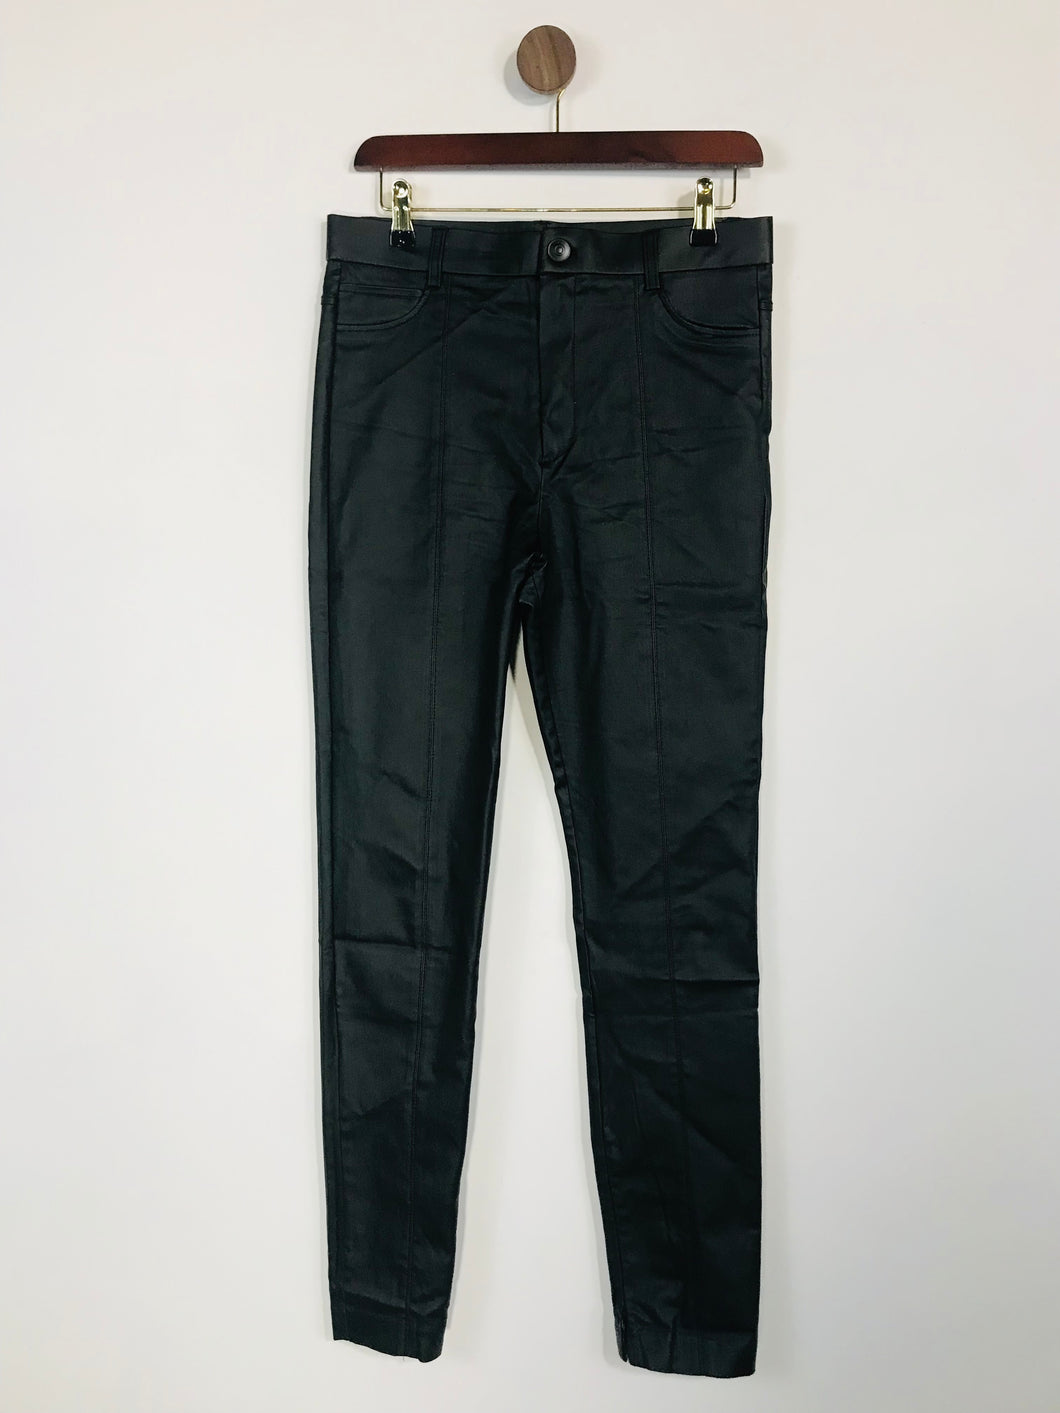 Zara Women's Leather Look High Waisted Skinny Jeans | L UK14 | Black